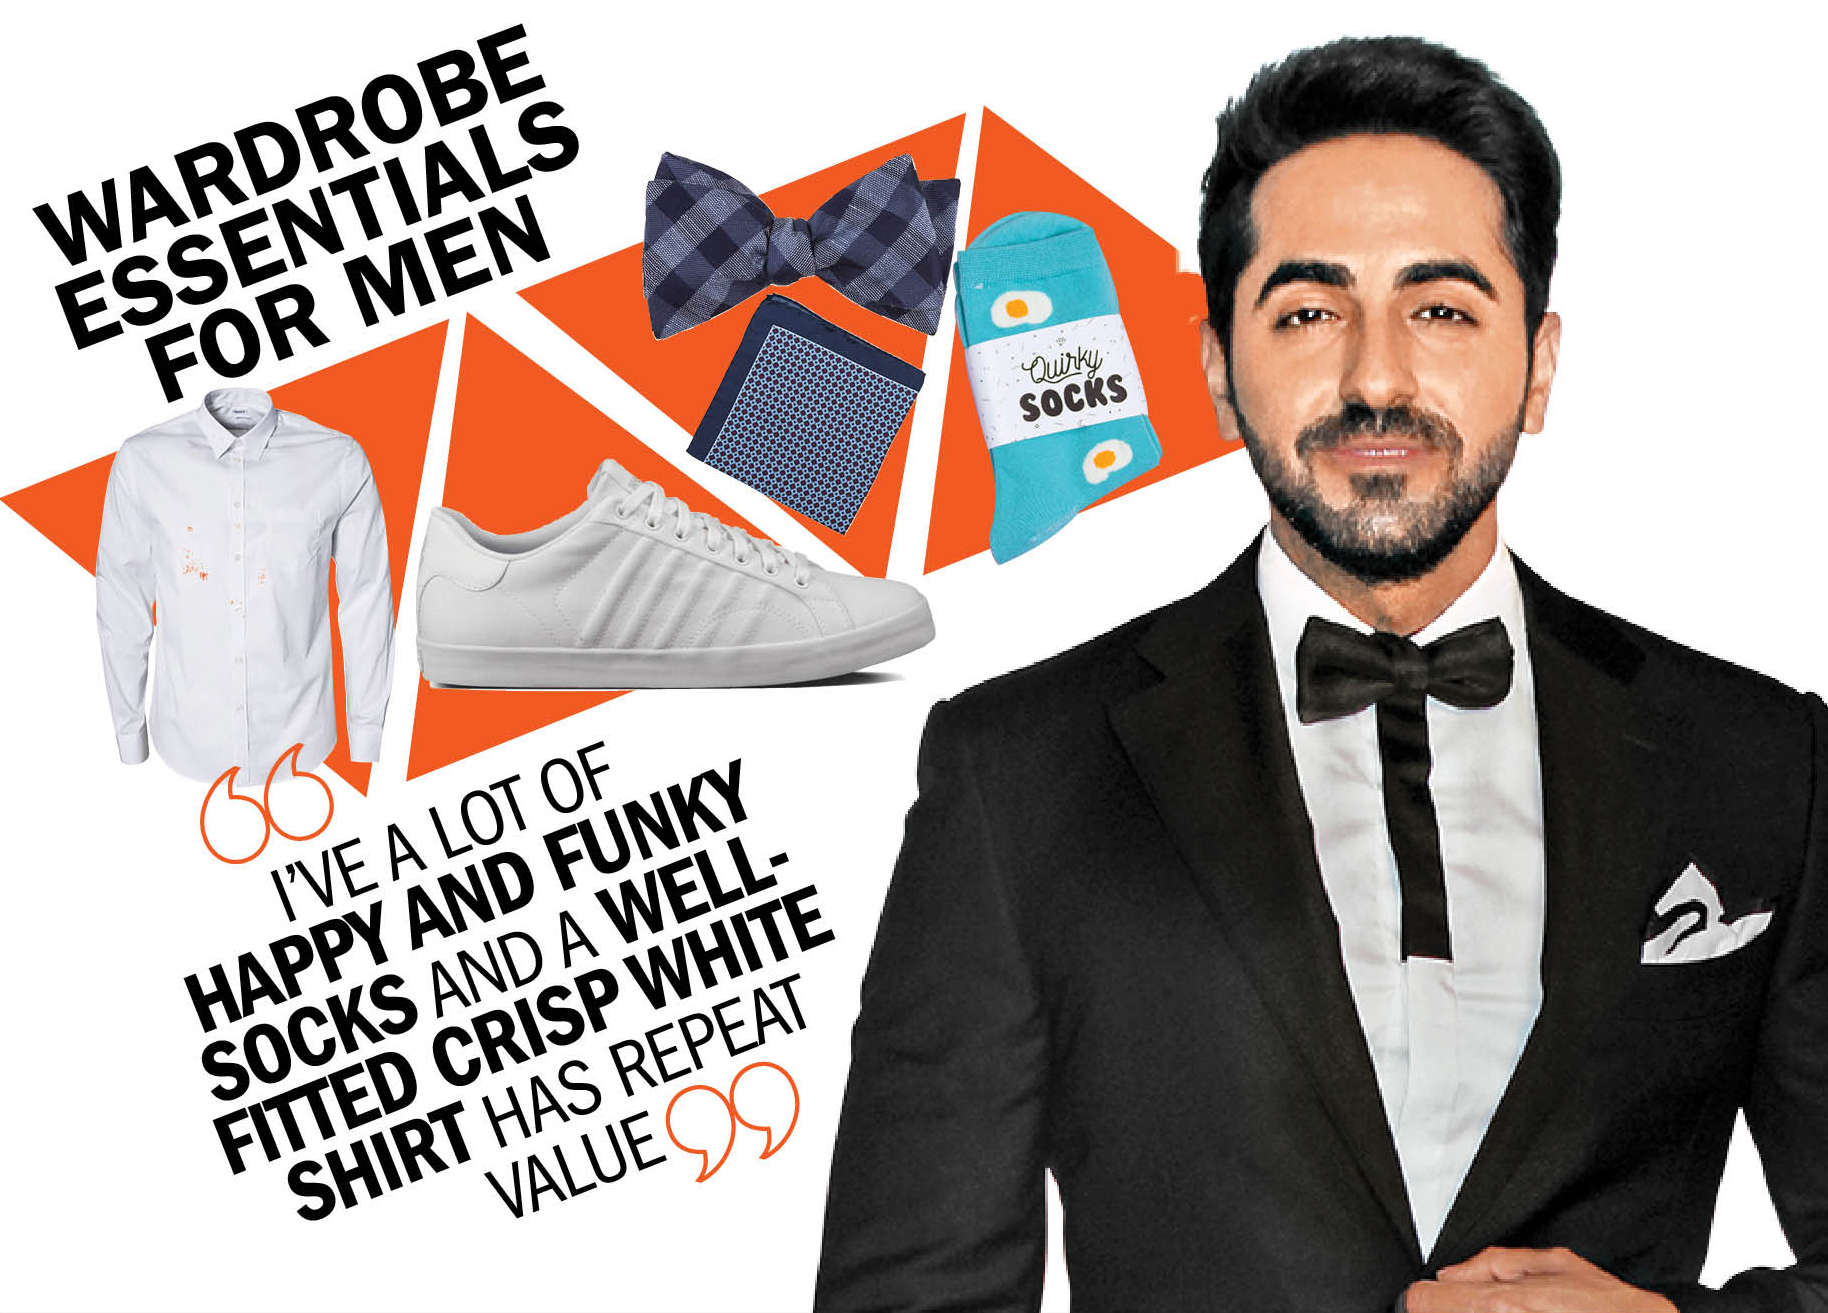 The Wardrobe Essentials for Men